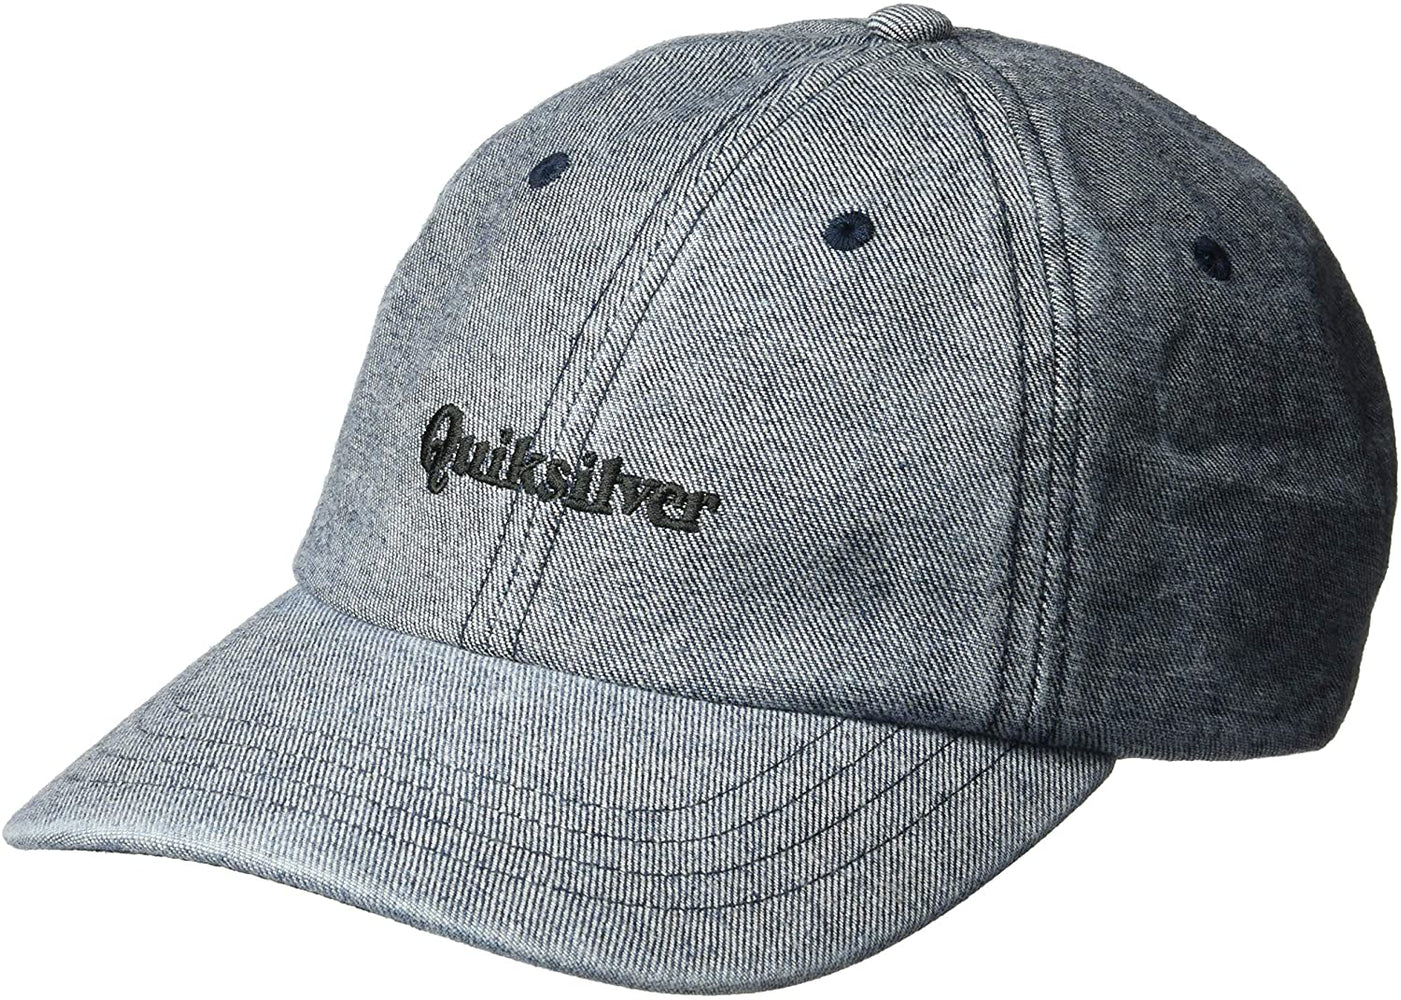 Quiksilver Men's Lawn Bowler Trucker Hat